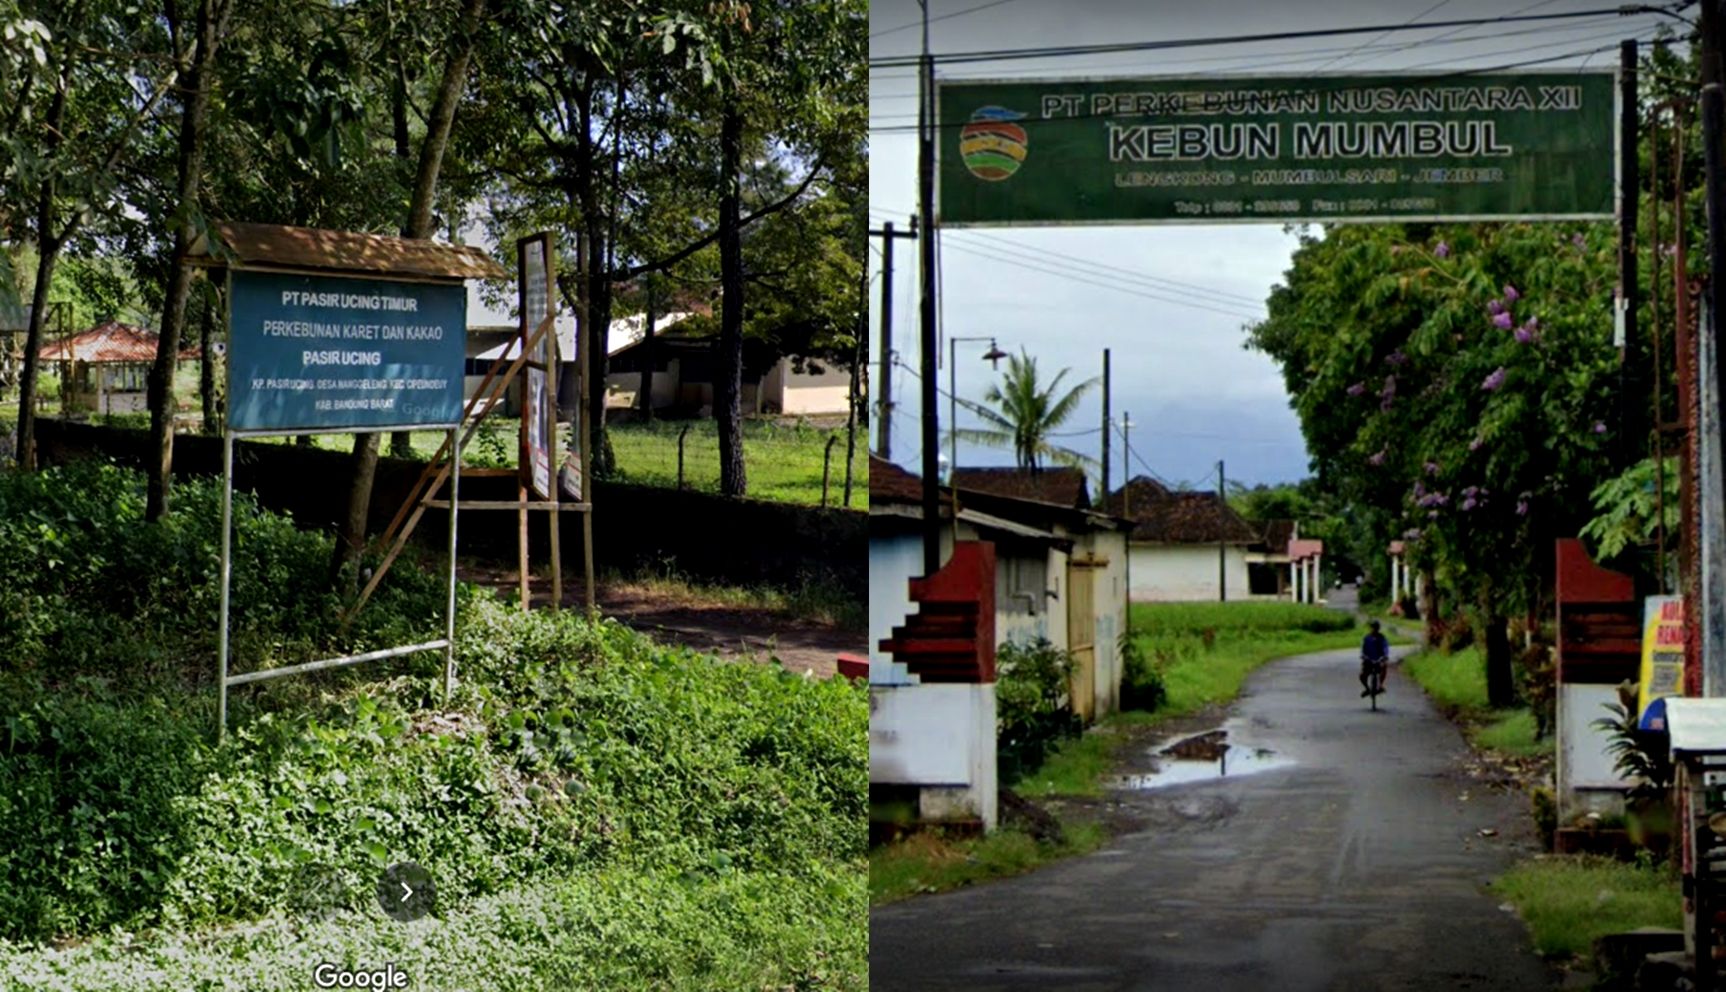 Gerbang Perkebunan Bajabang/Pasir Ucing, Bandung Barat (kiri) dan PTPN XII Kebun Mumbul, Jember (kanan)